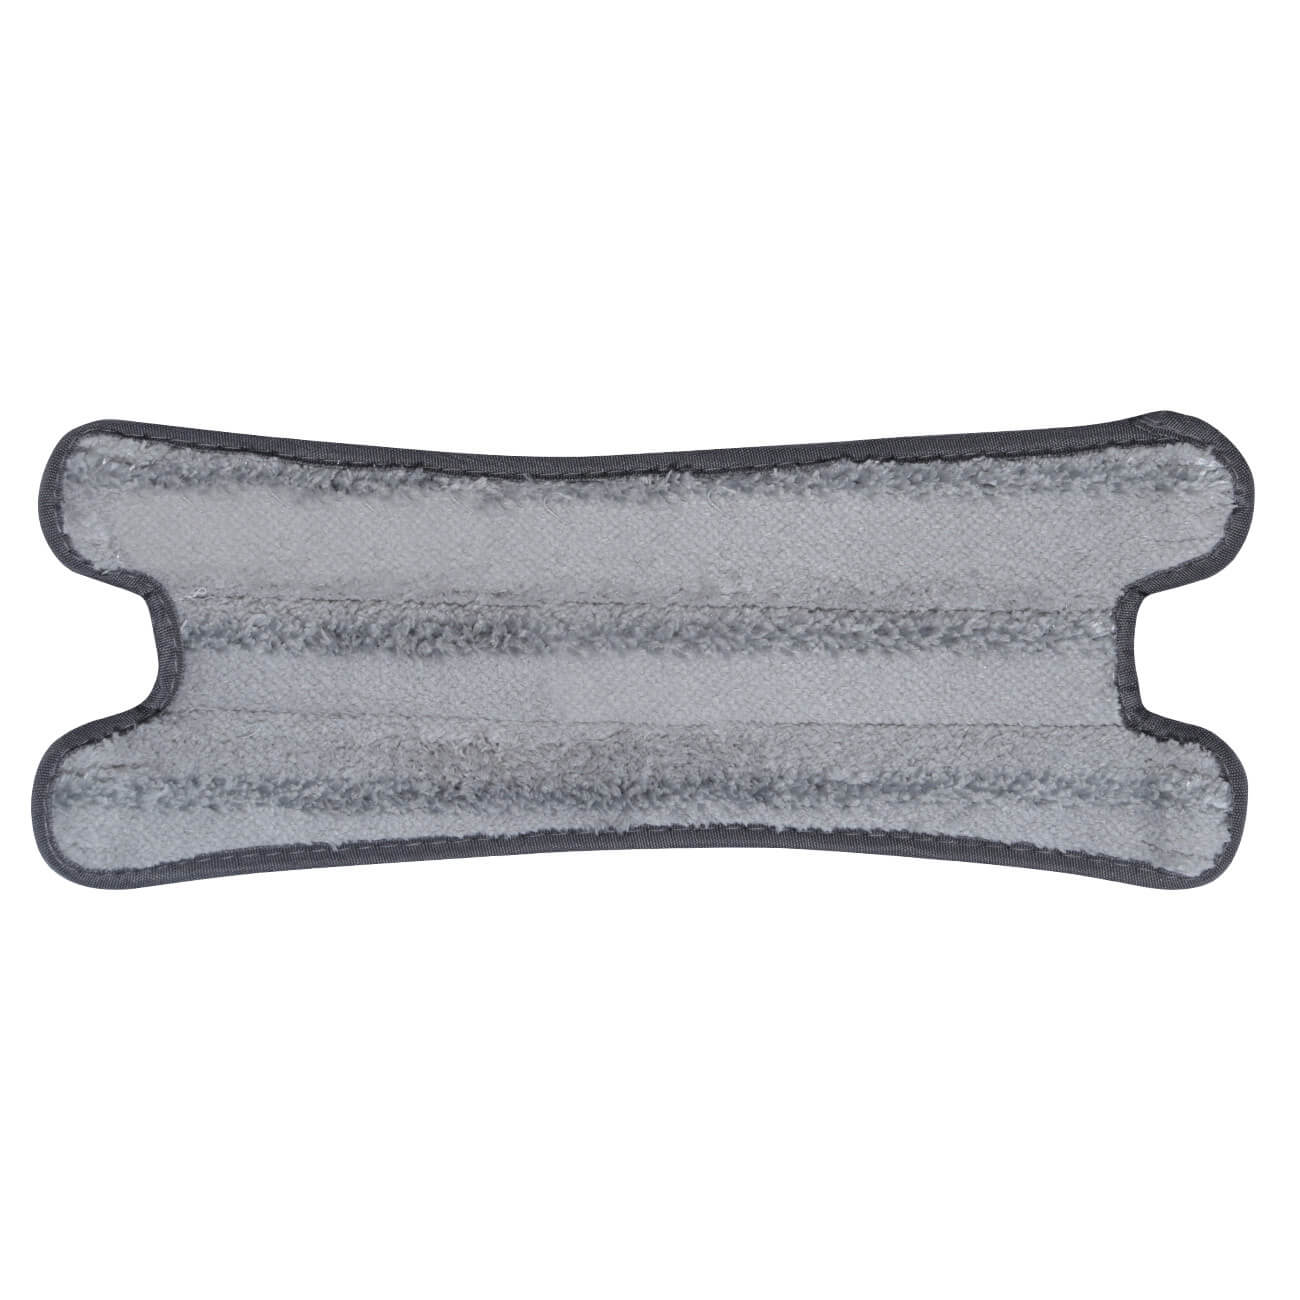 Kuchenland Тряпка для швабры УТ000077177 насадка для плоской швабры доляна 42×12 см 60 гр микрофибра цвет серый